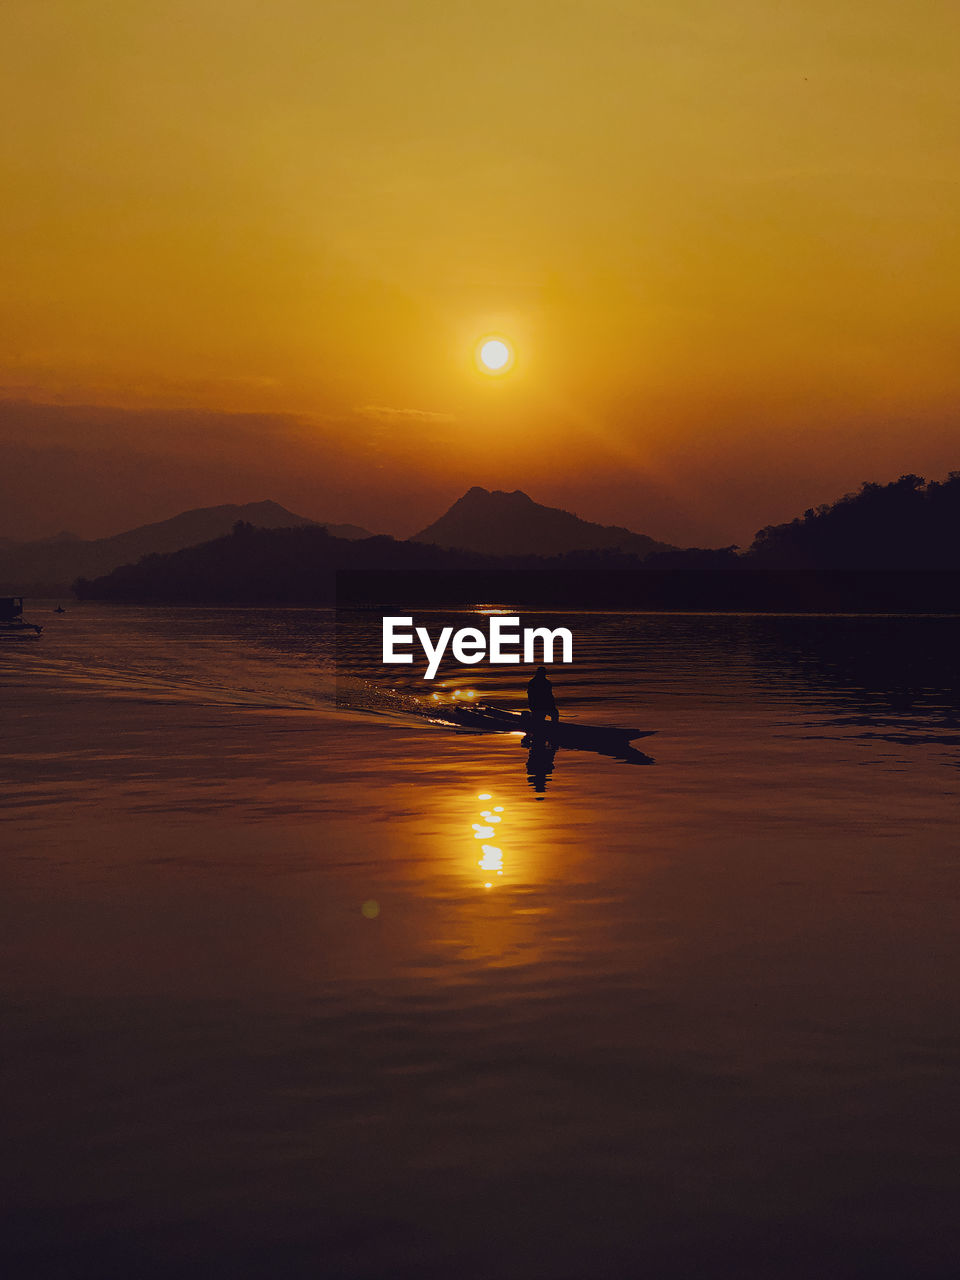 Silhouette man on sea against orange sky during sunset